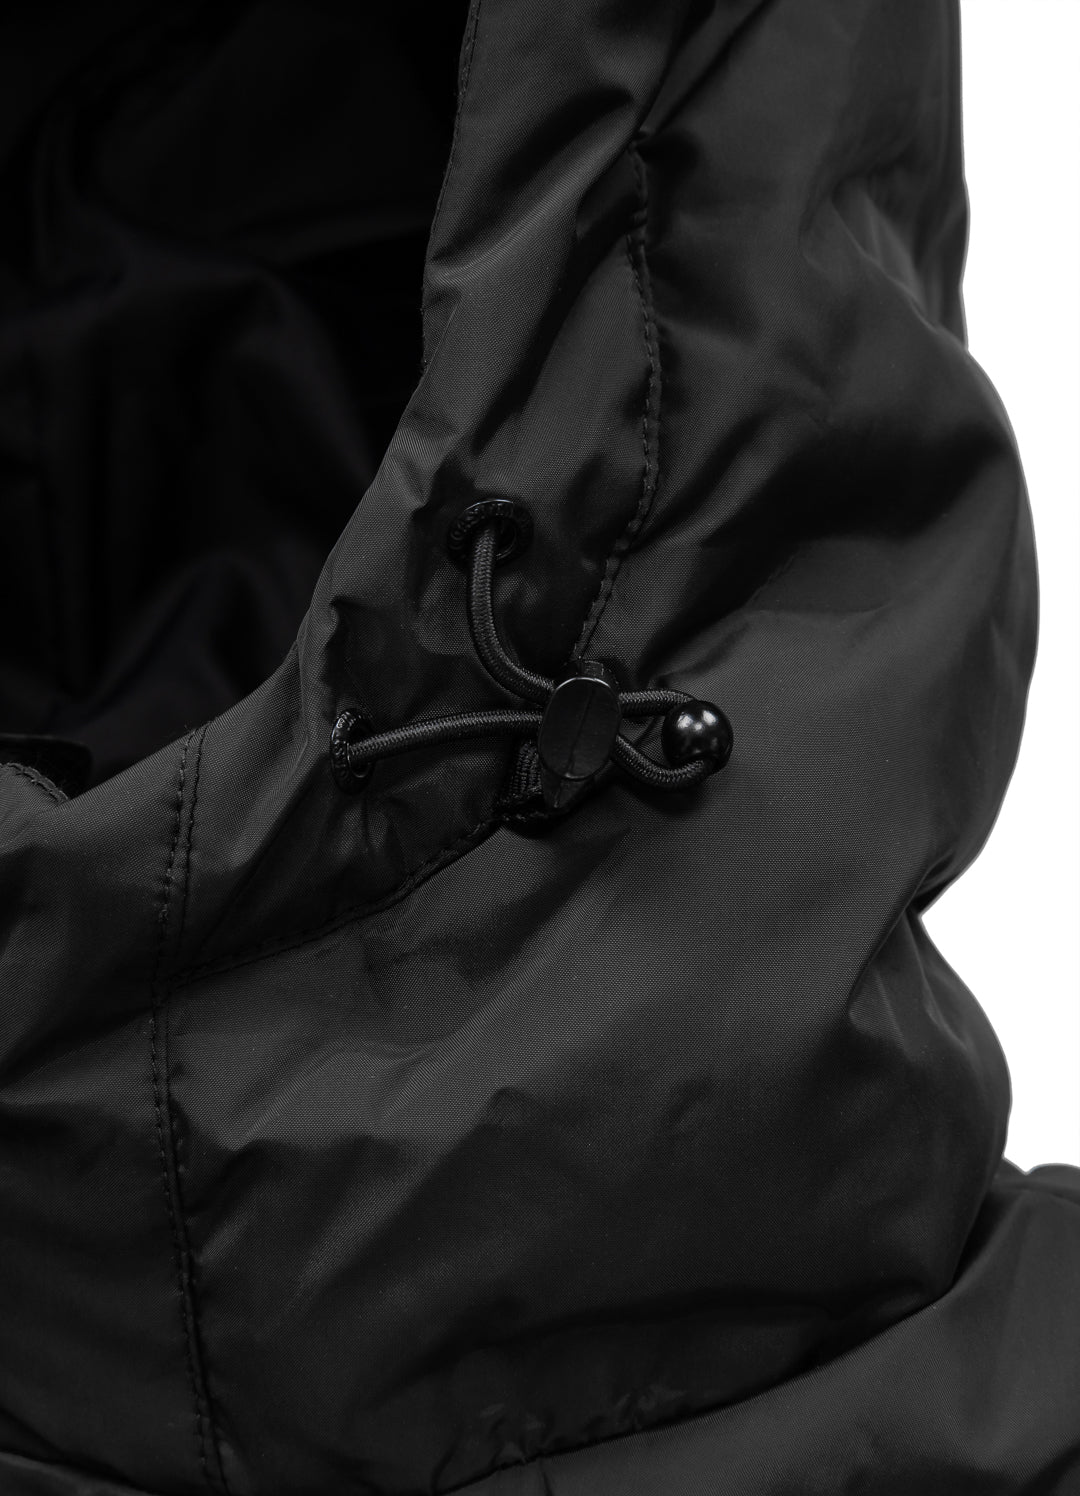 CARVER Black Quilted Hooded Jacket.